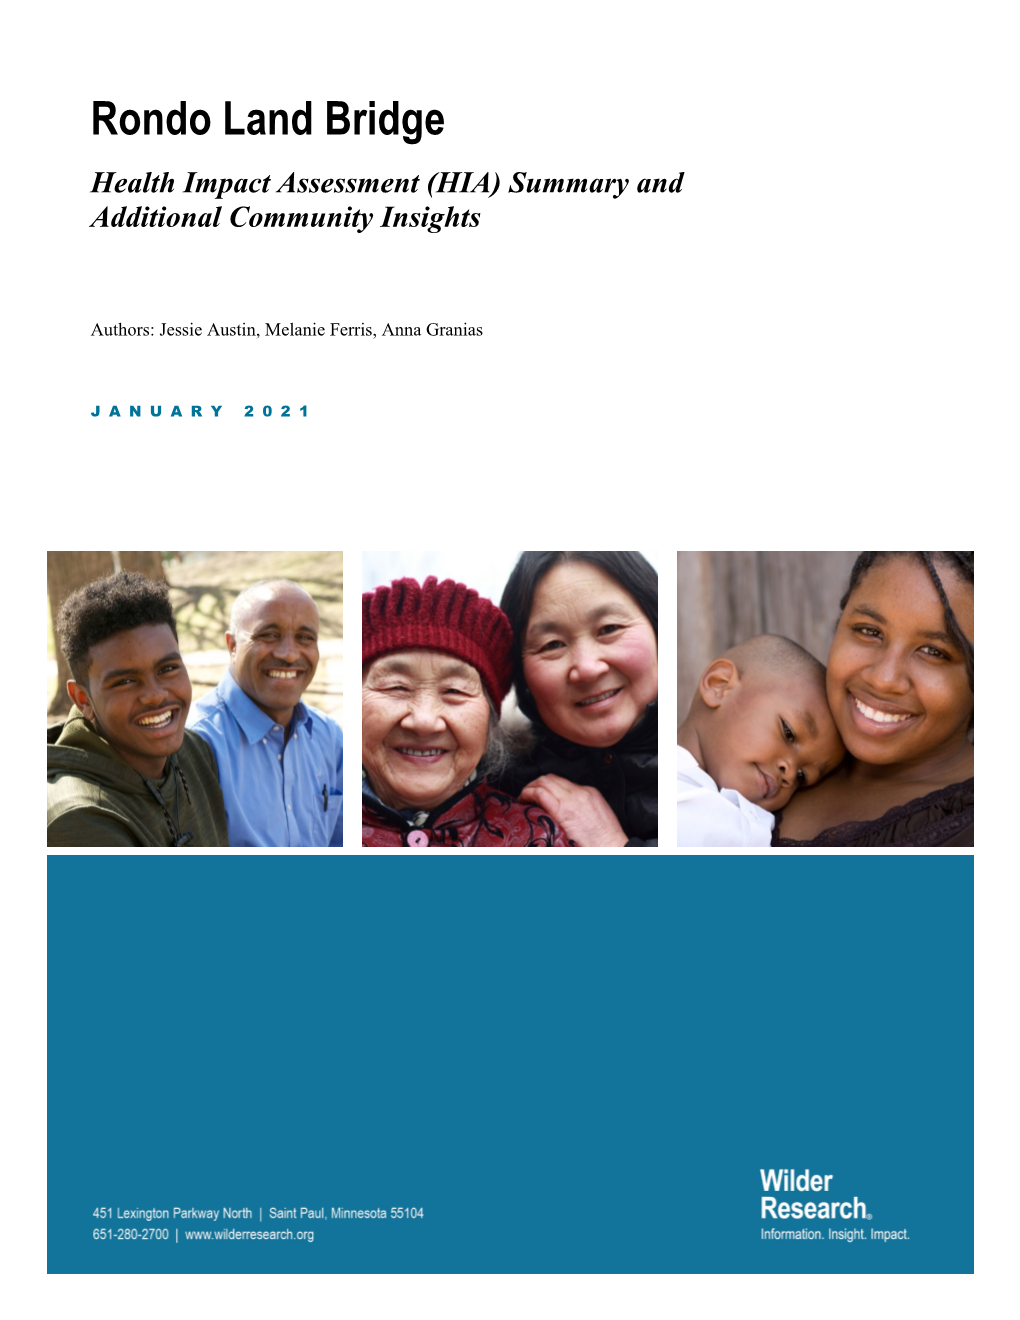 Rondo Land Bridge Health Impact Assessment (HIA) Summary and Additional Community Insights